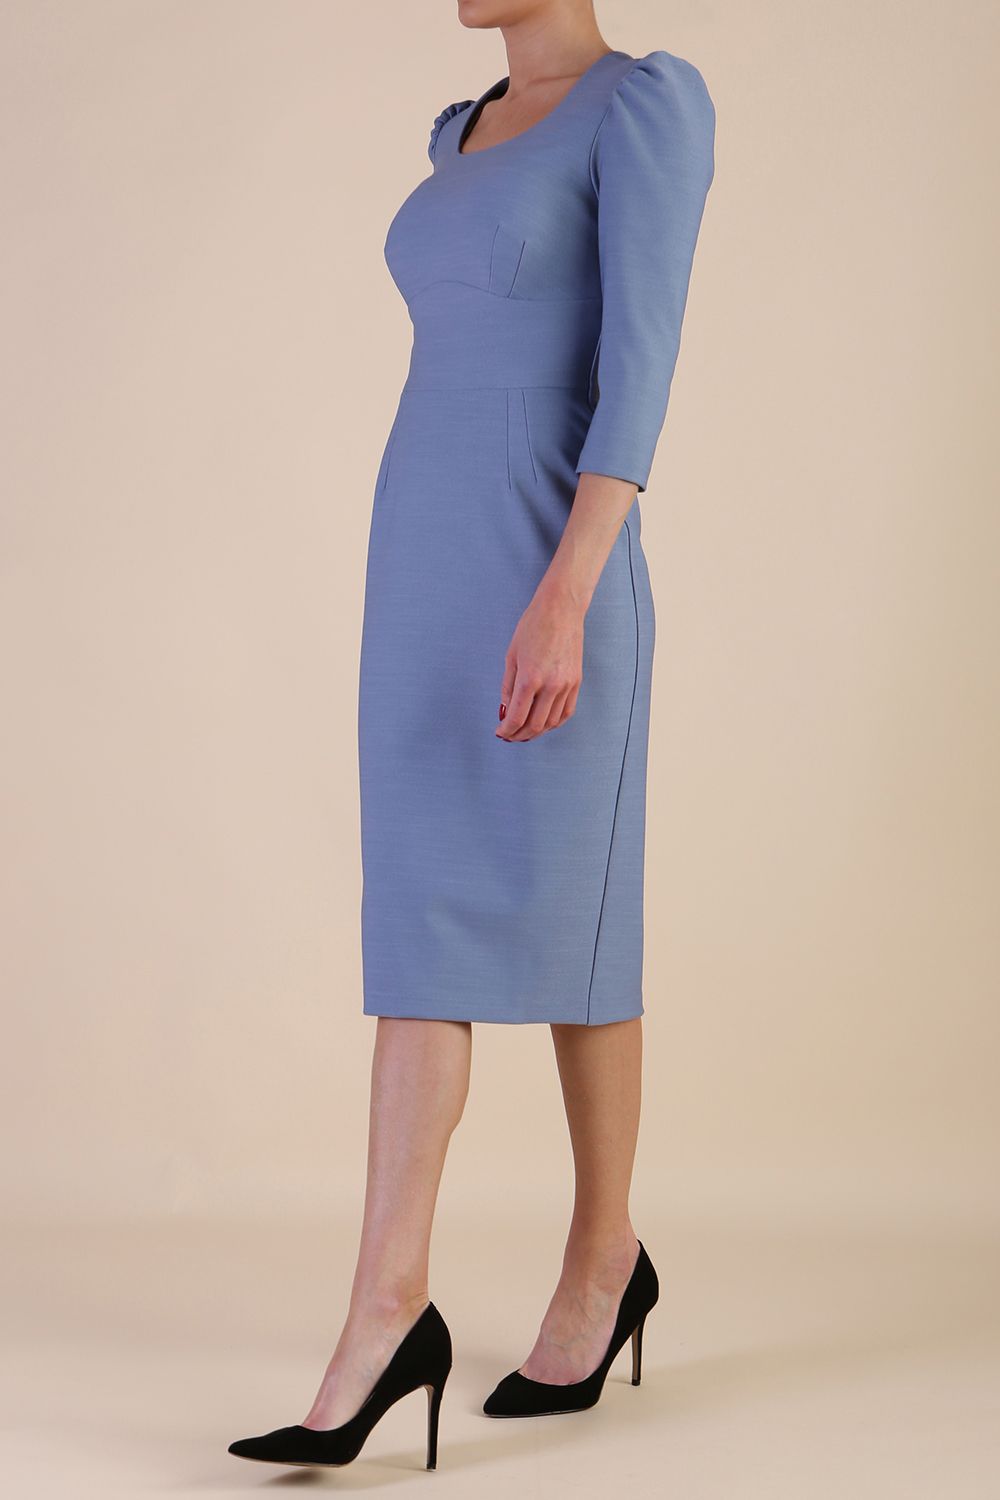 Model wearing diva catwalk Aurelia 3/4 Sleeve Knee Lenght Pencil Dress in Steel Blue side